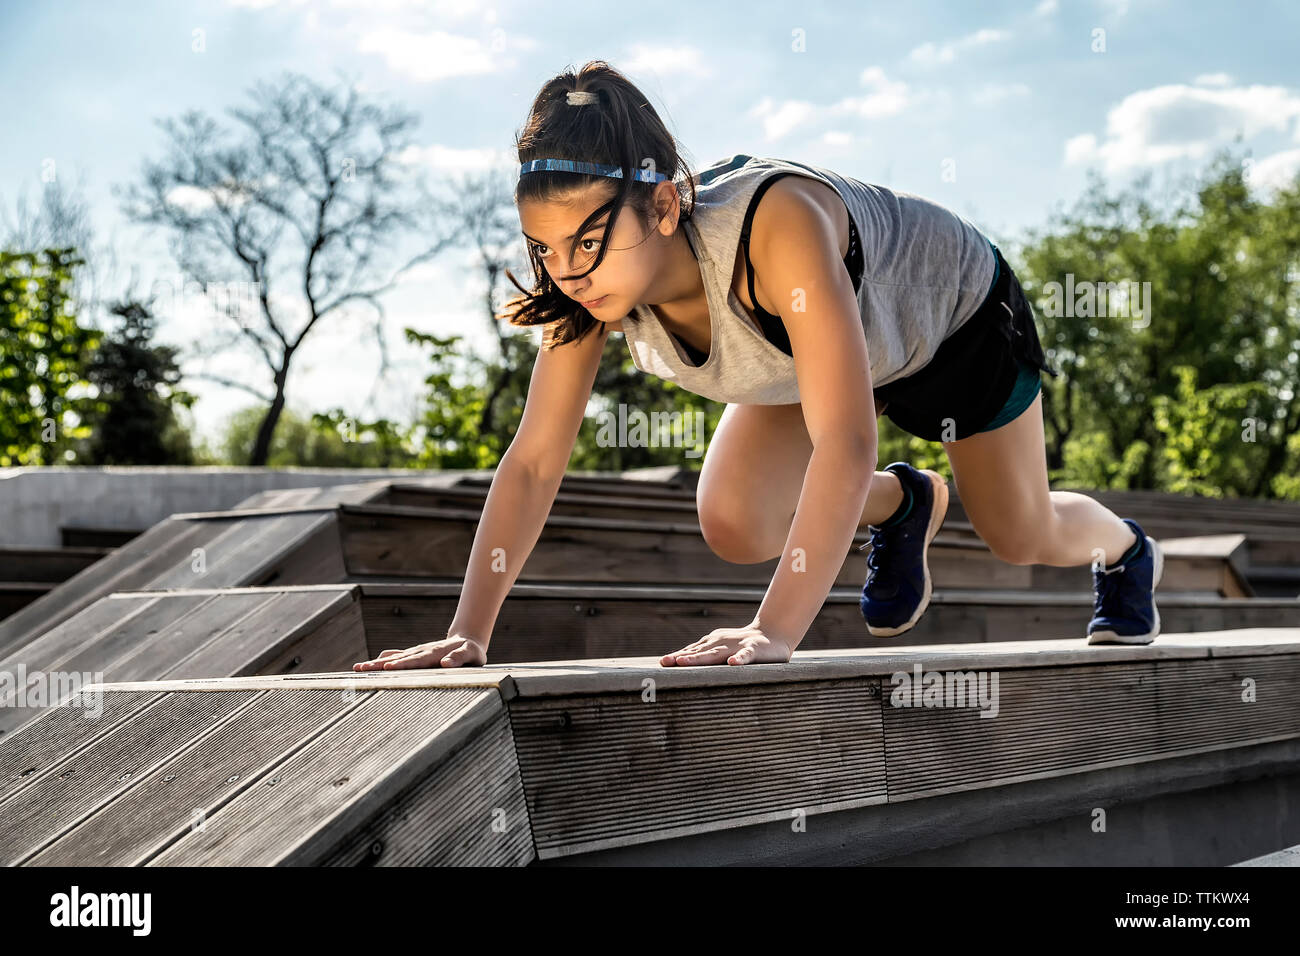 Female athlete exercising on wooden seat against sky Stock Photo